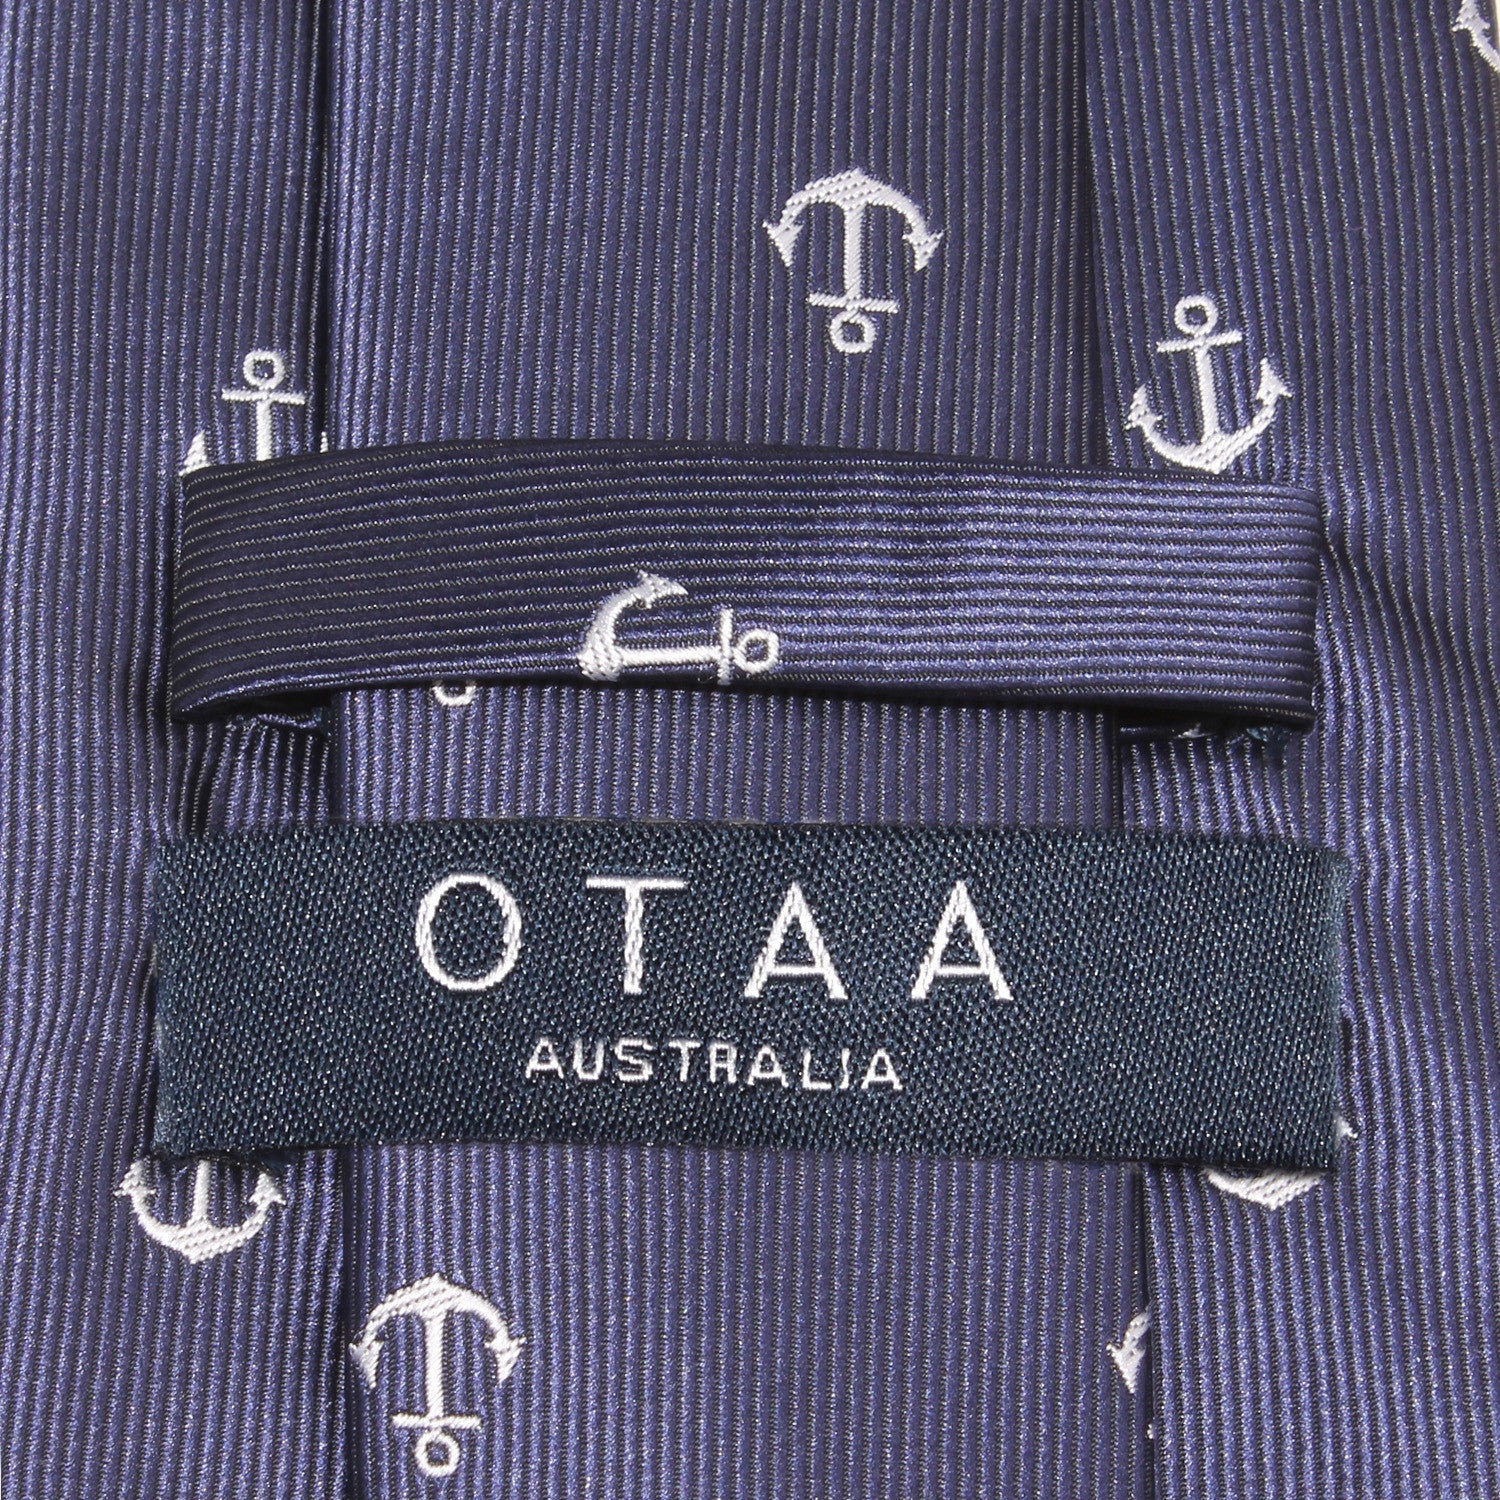 The OTAA Navy Blue Skinny Tie